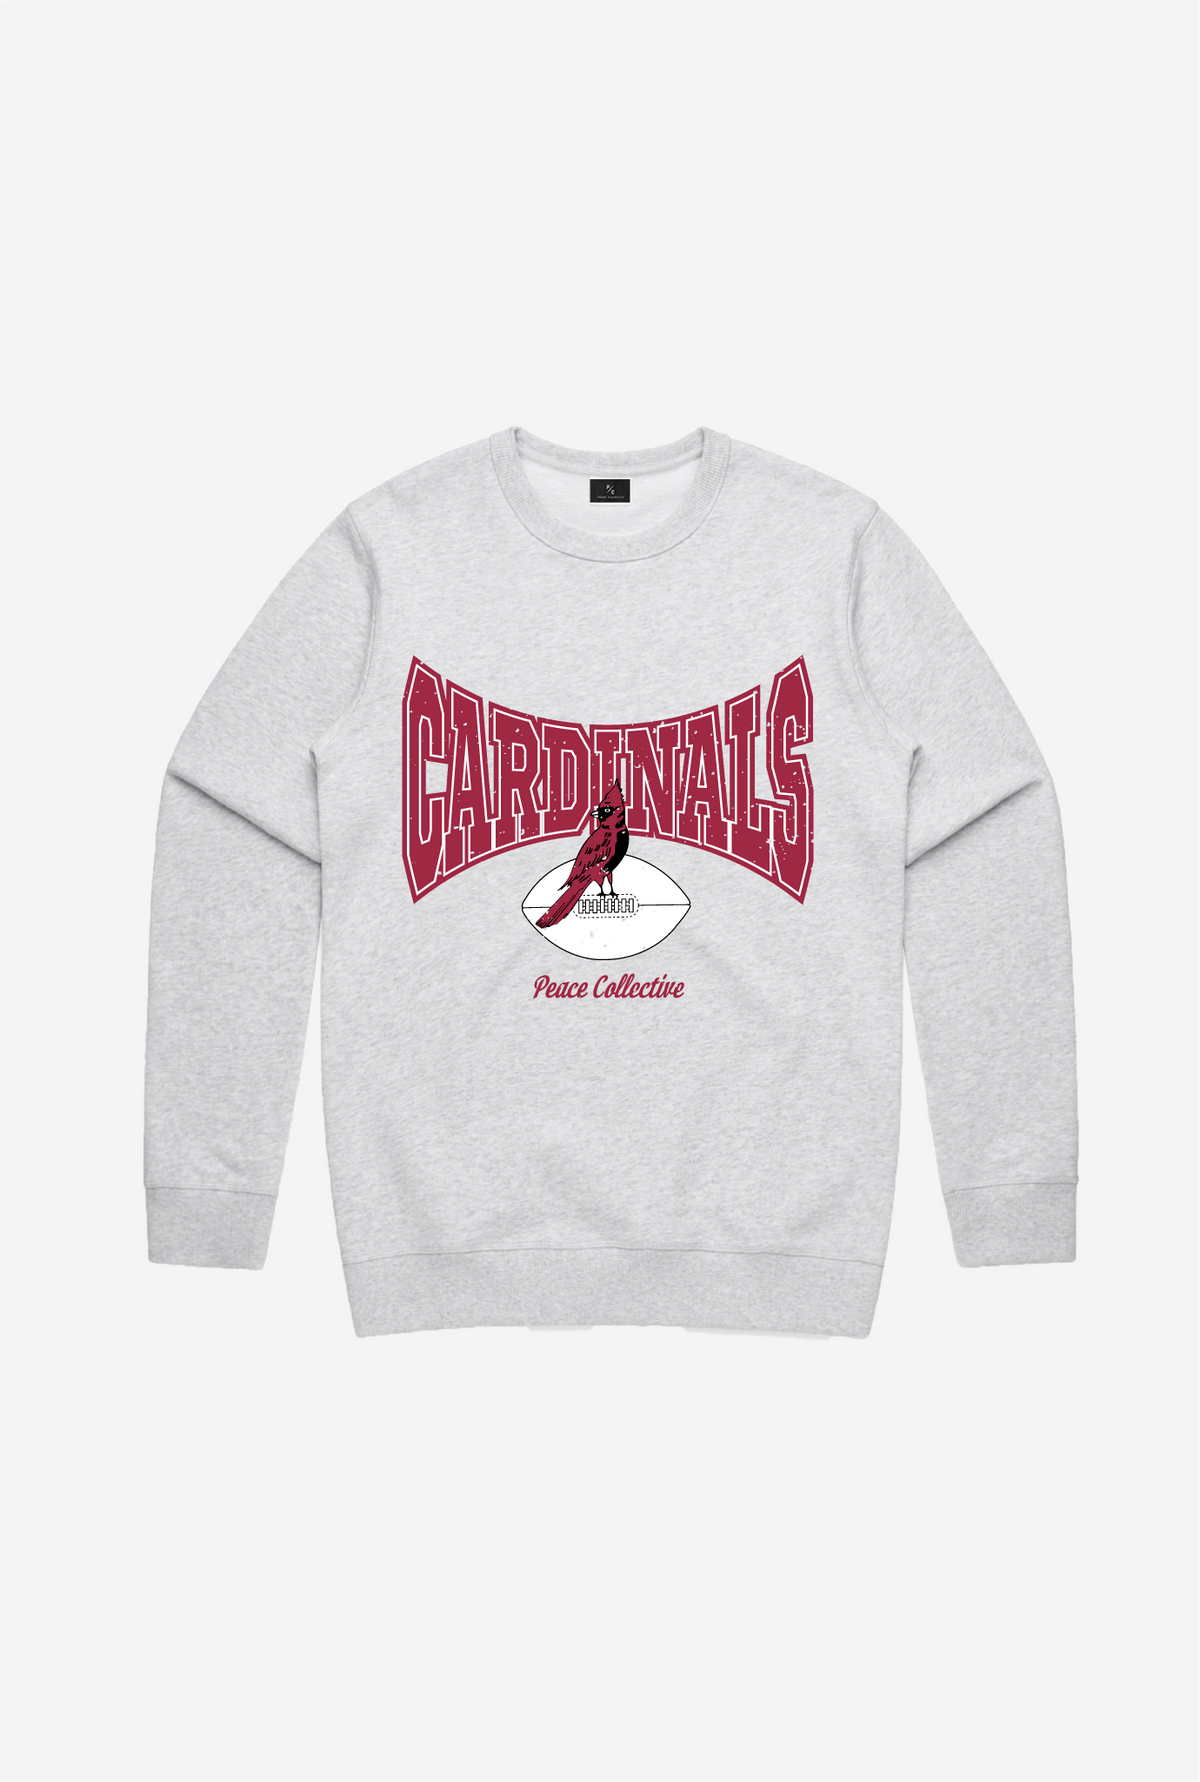 Chicago Cardinals Washed Graphic Crewneck - Ash